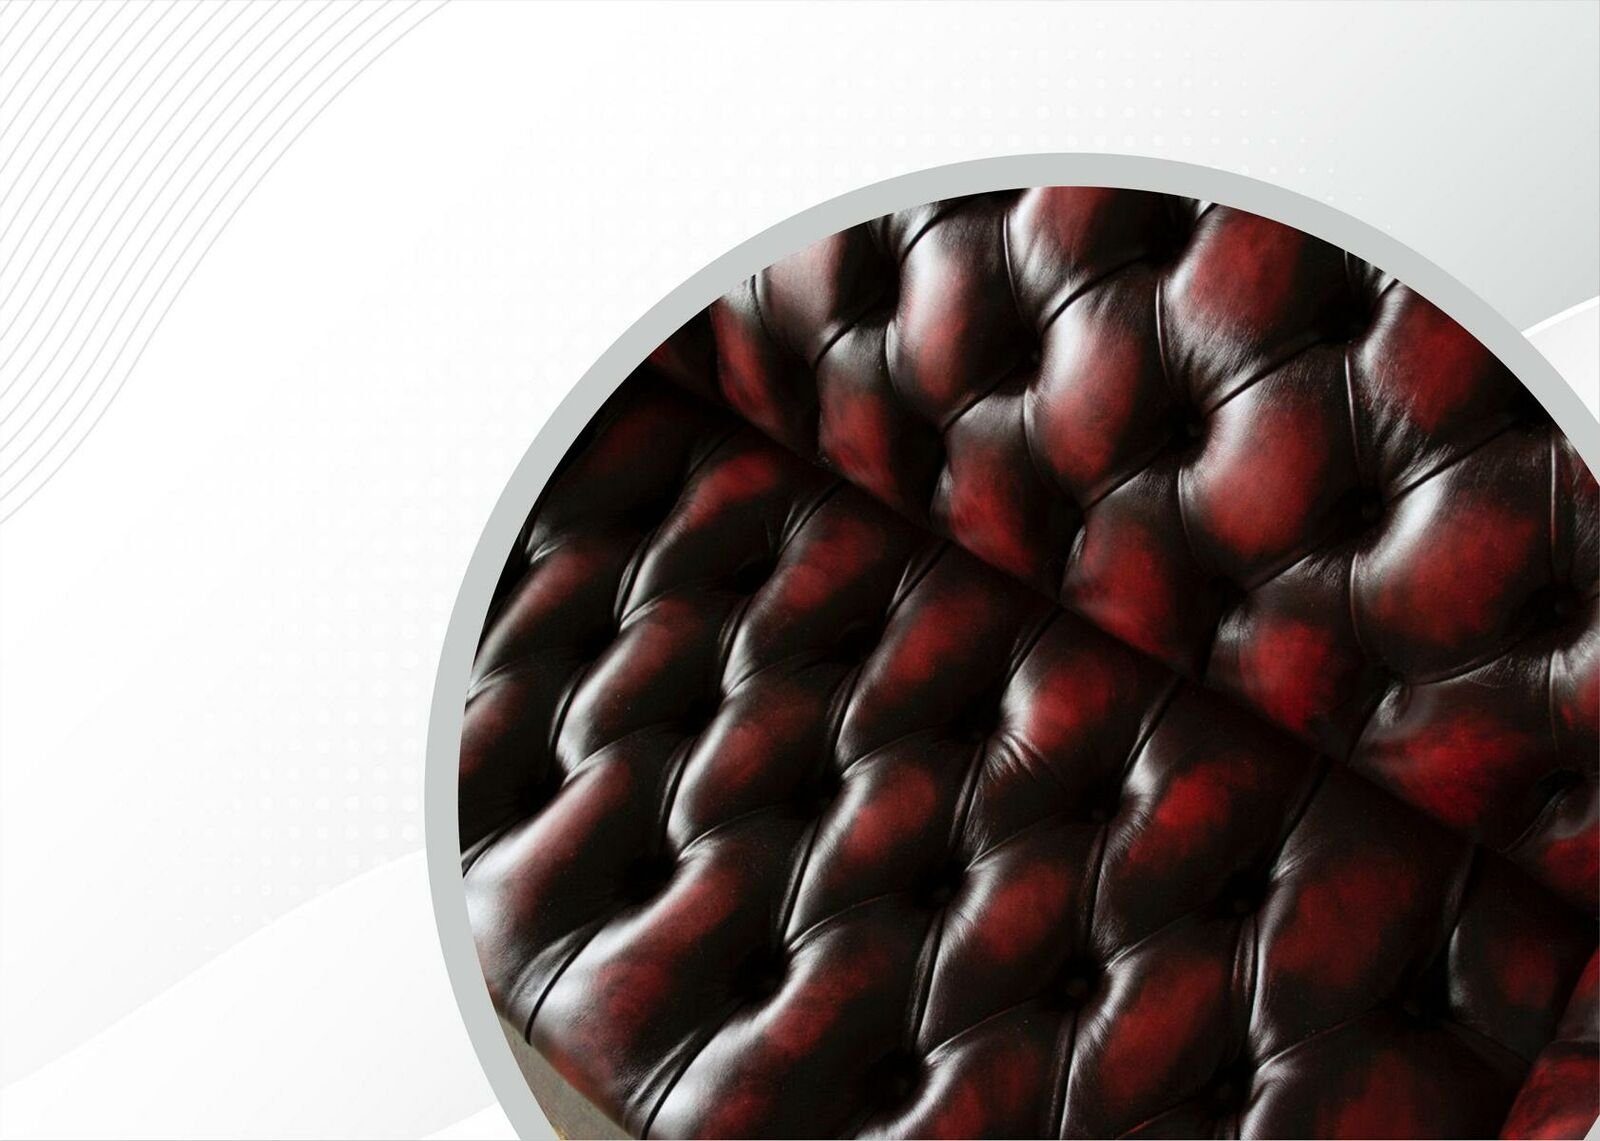 3-er Chesterfield-Sofa Dunkelroter Dreisitzer Made JVmoebel Chesterfield in Modern Couch Europe Neu,